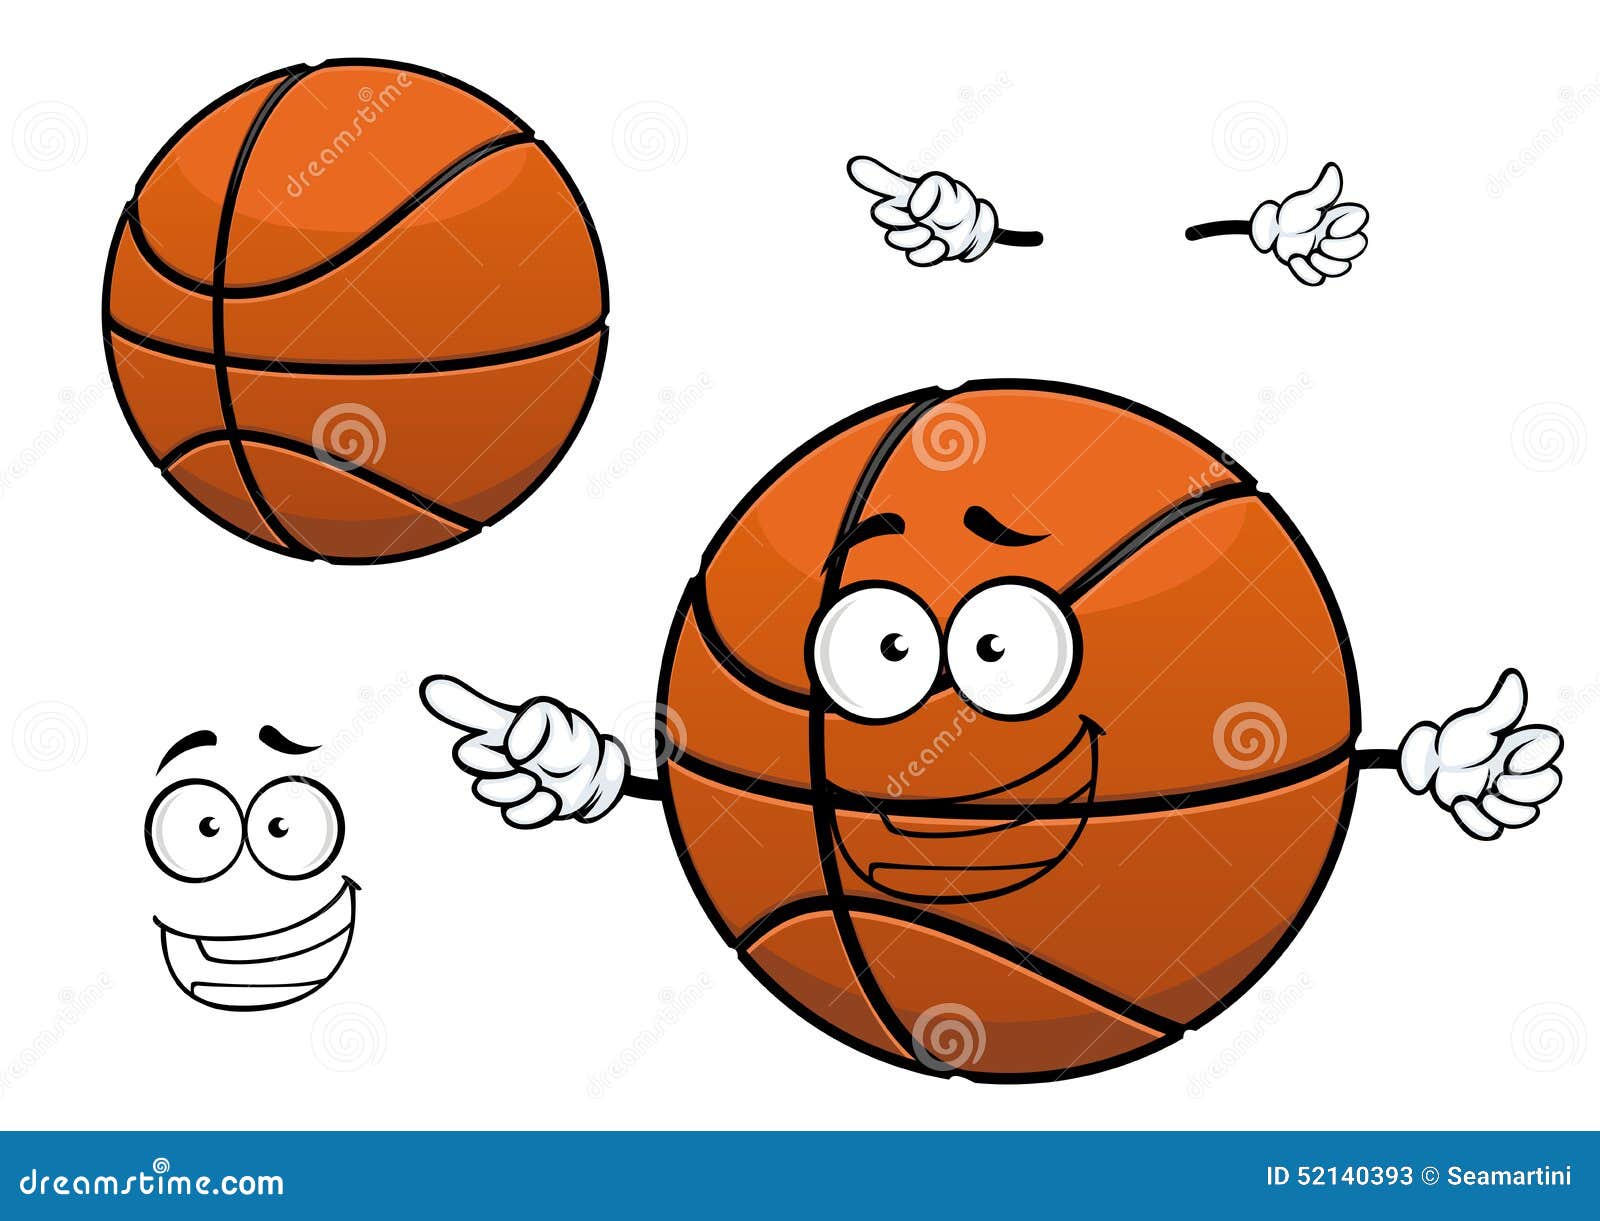 Cartoon Happy Basketball Ball Mascot Character Stock Vector - Illustration  of entertainment, circle: 52140393